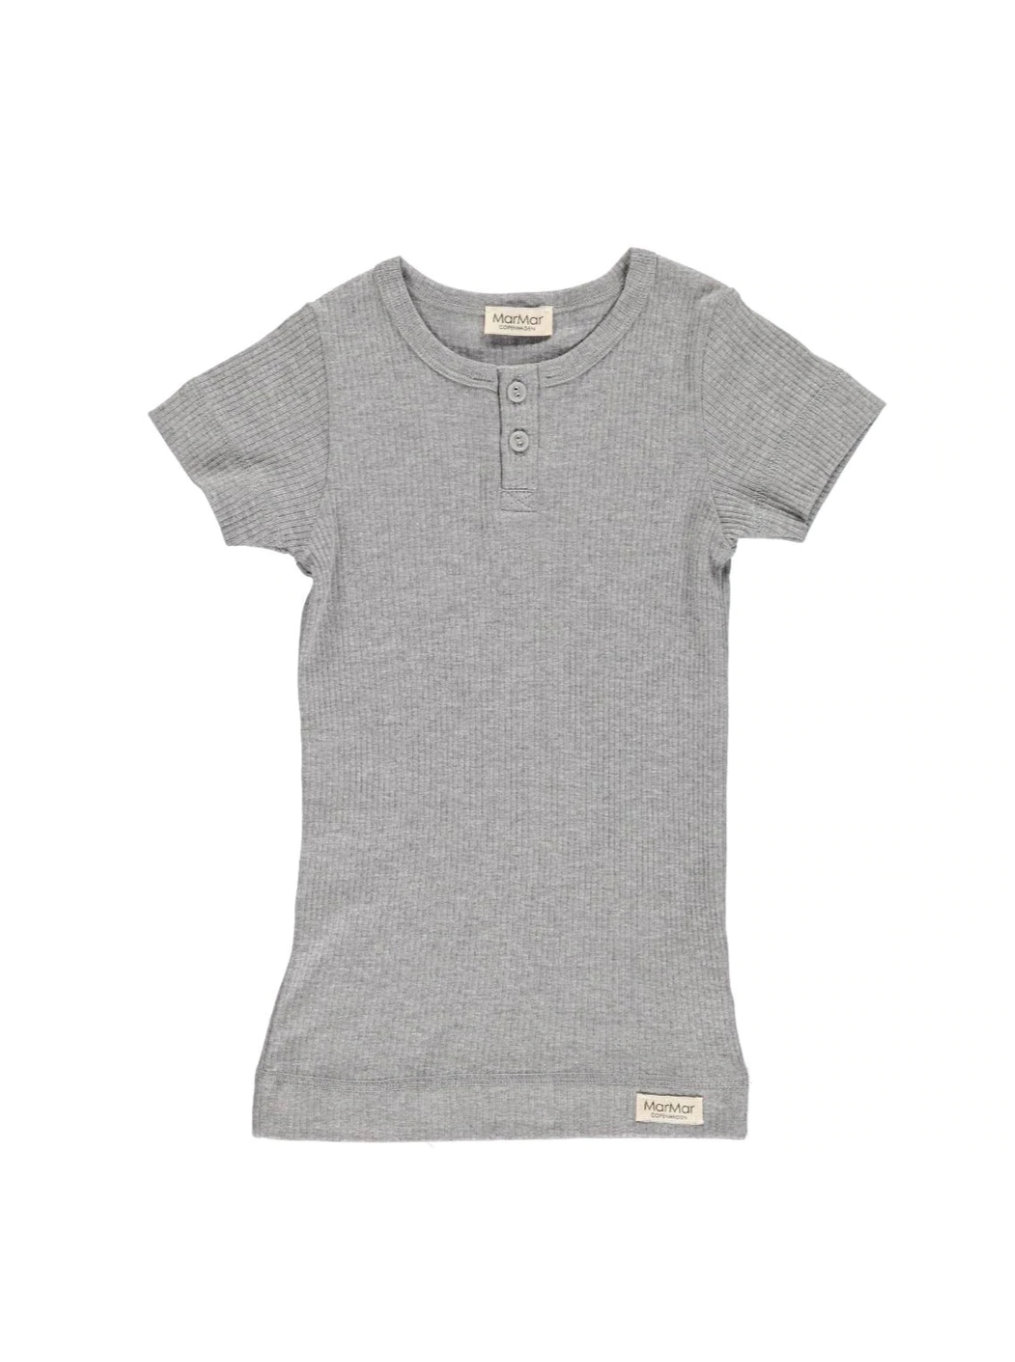 MarMar Tee SS, T-shirt - Grey Melange